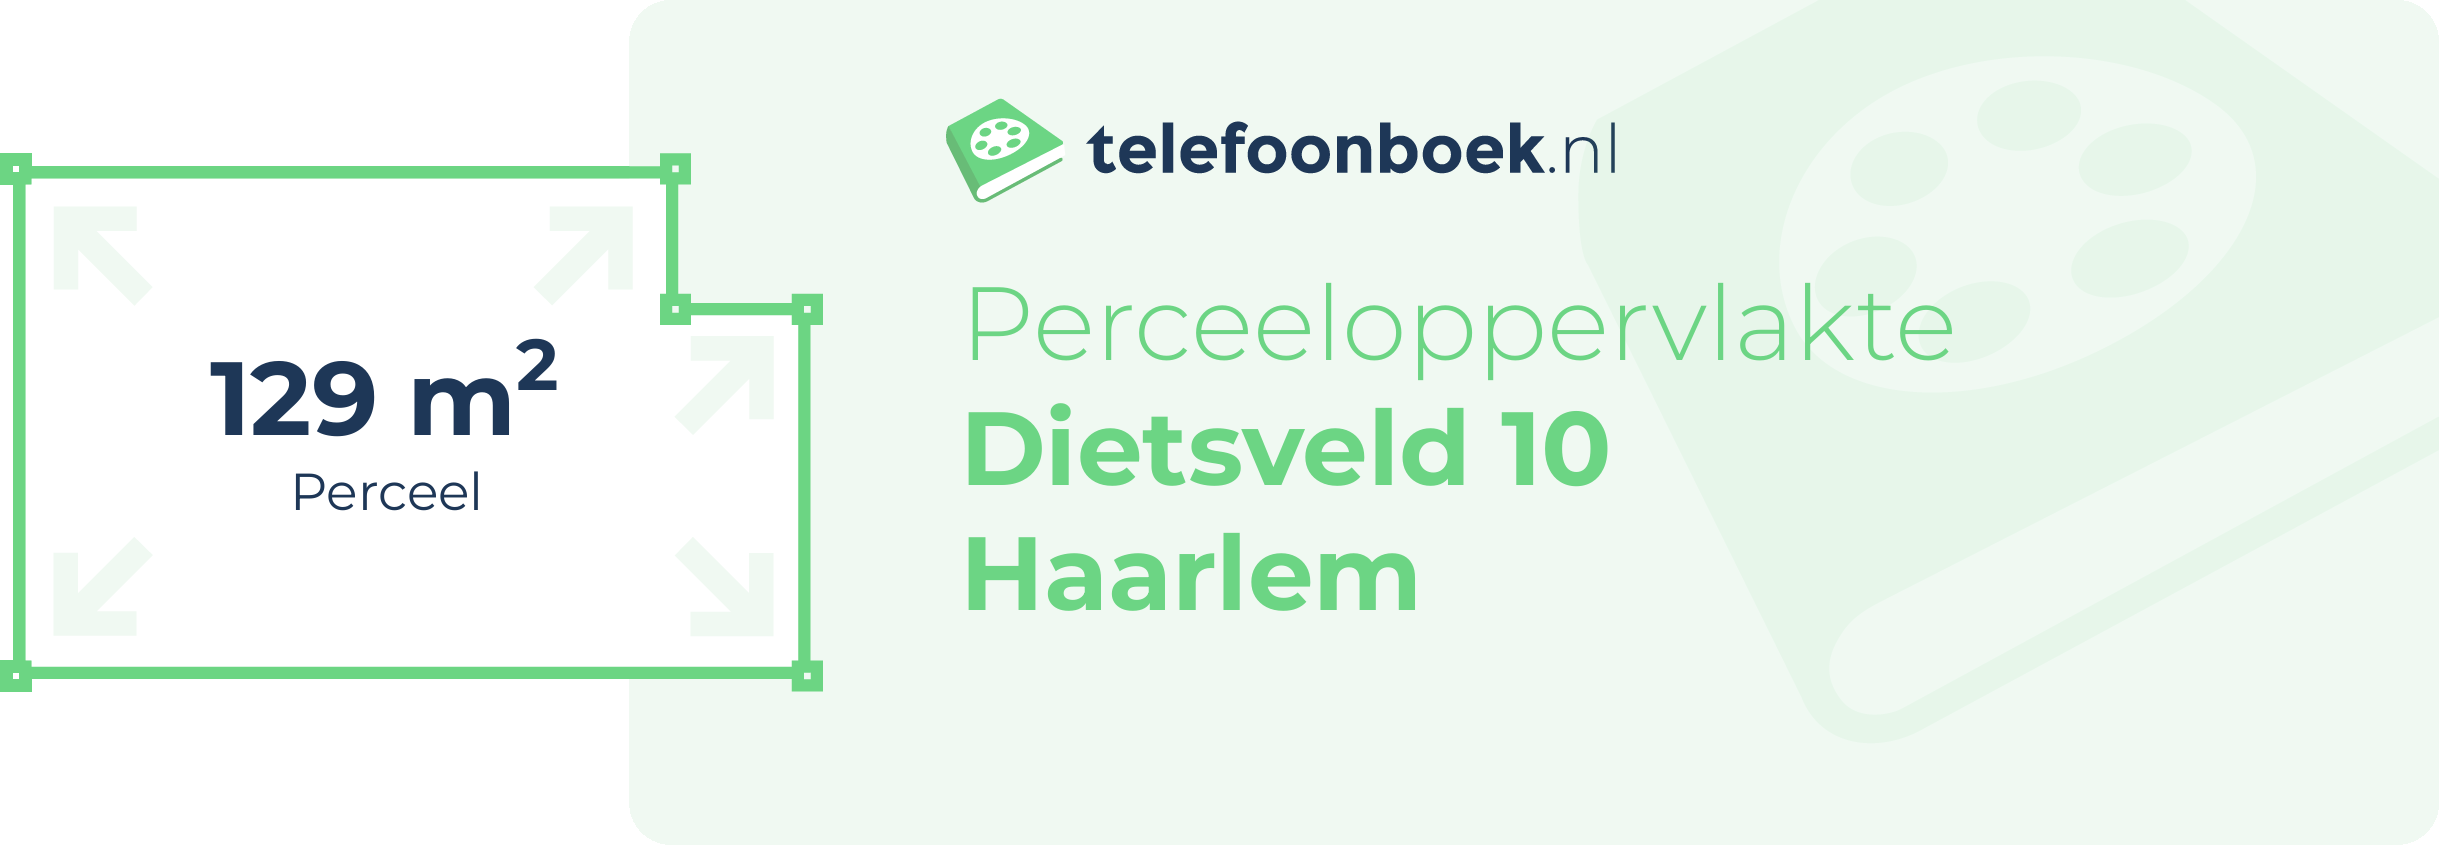 Perceeloppervlakte Dietsveld 10 Haarlem